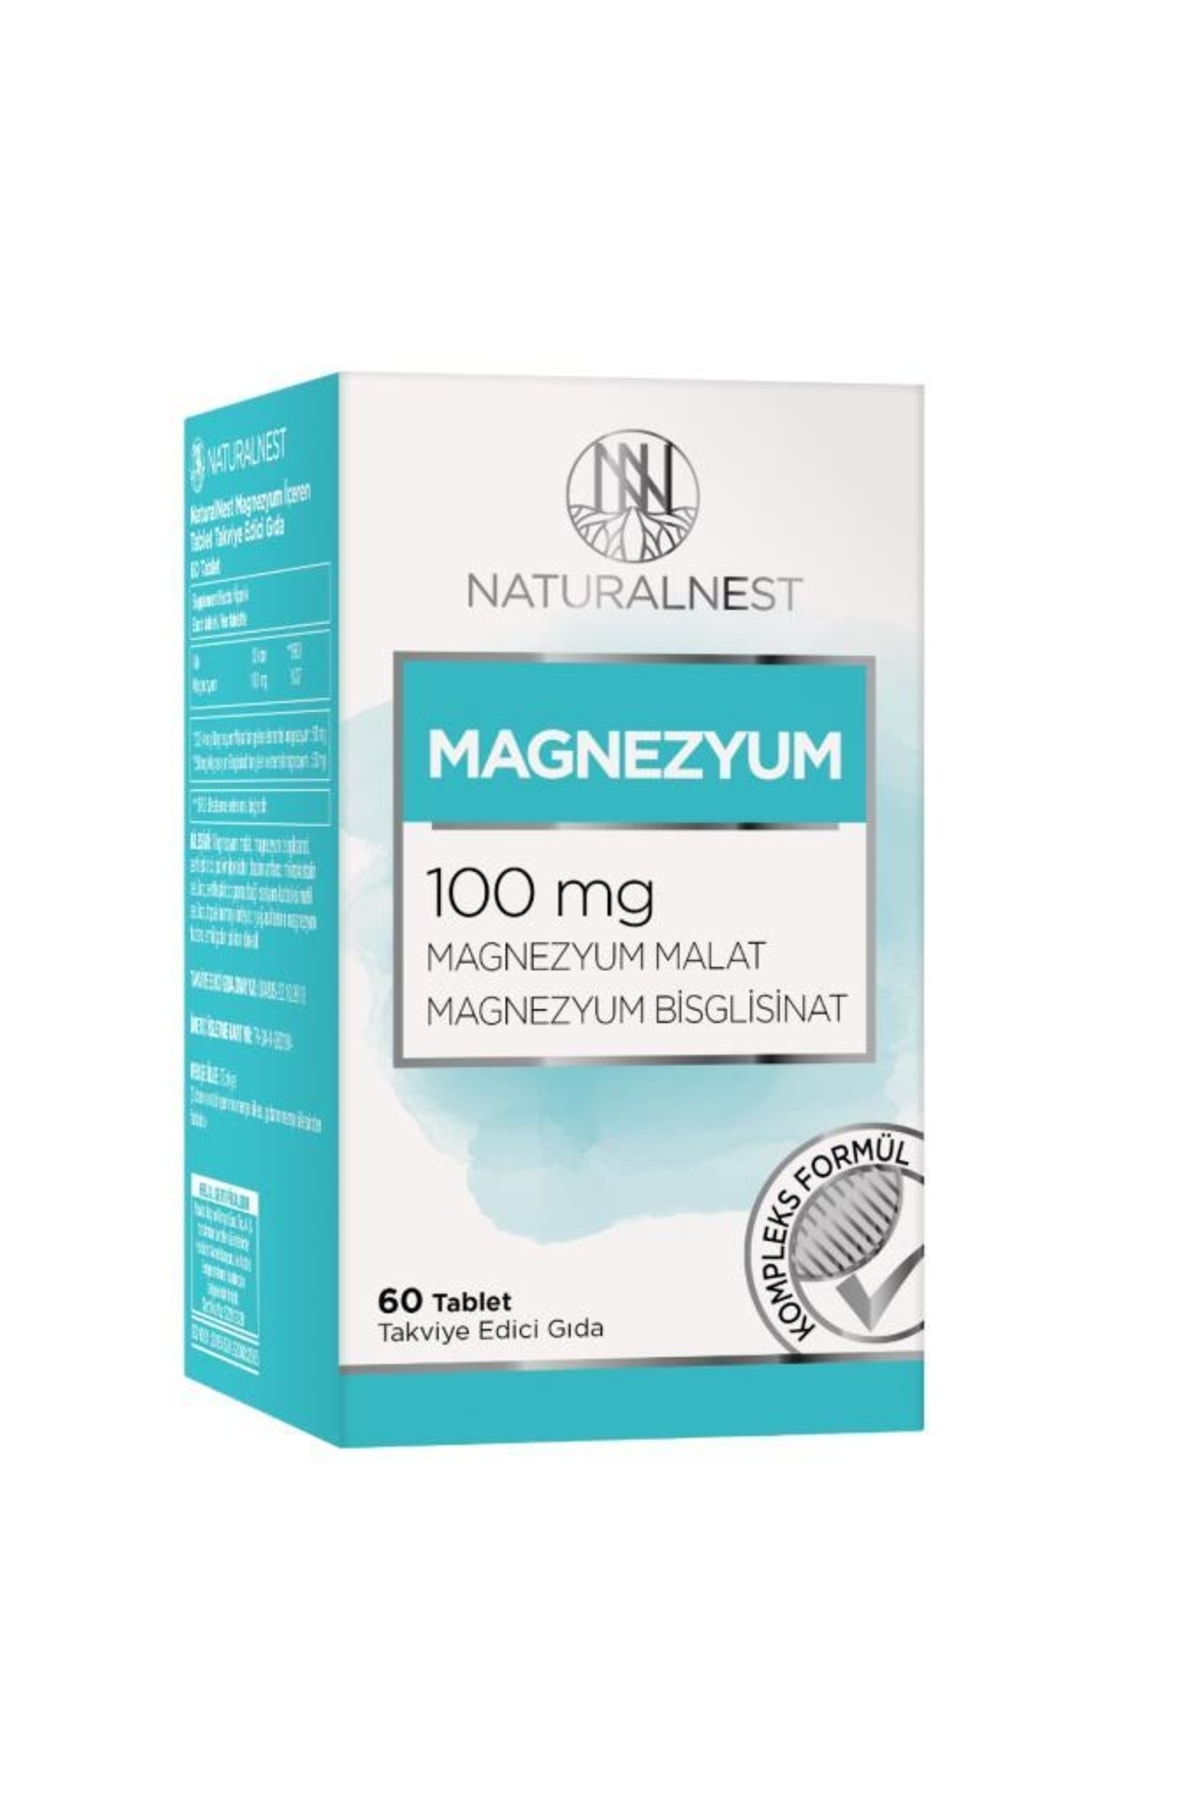 Naturalnest Naturelnest Magnezyum 100 Mg 60 Tablet